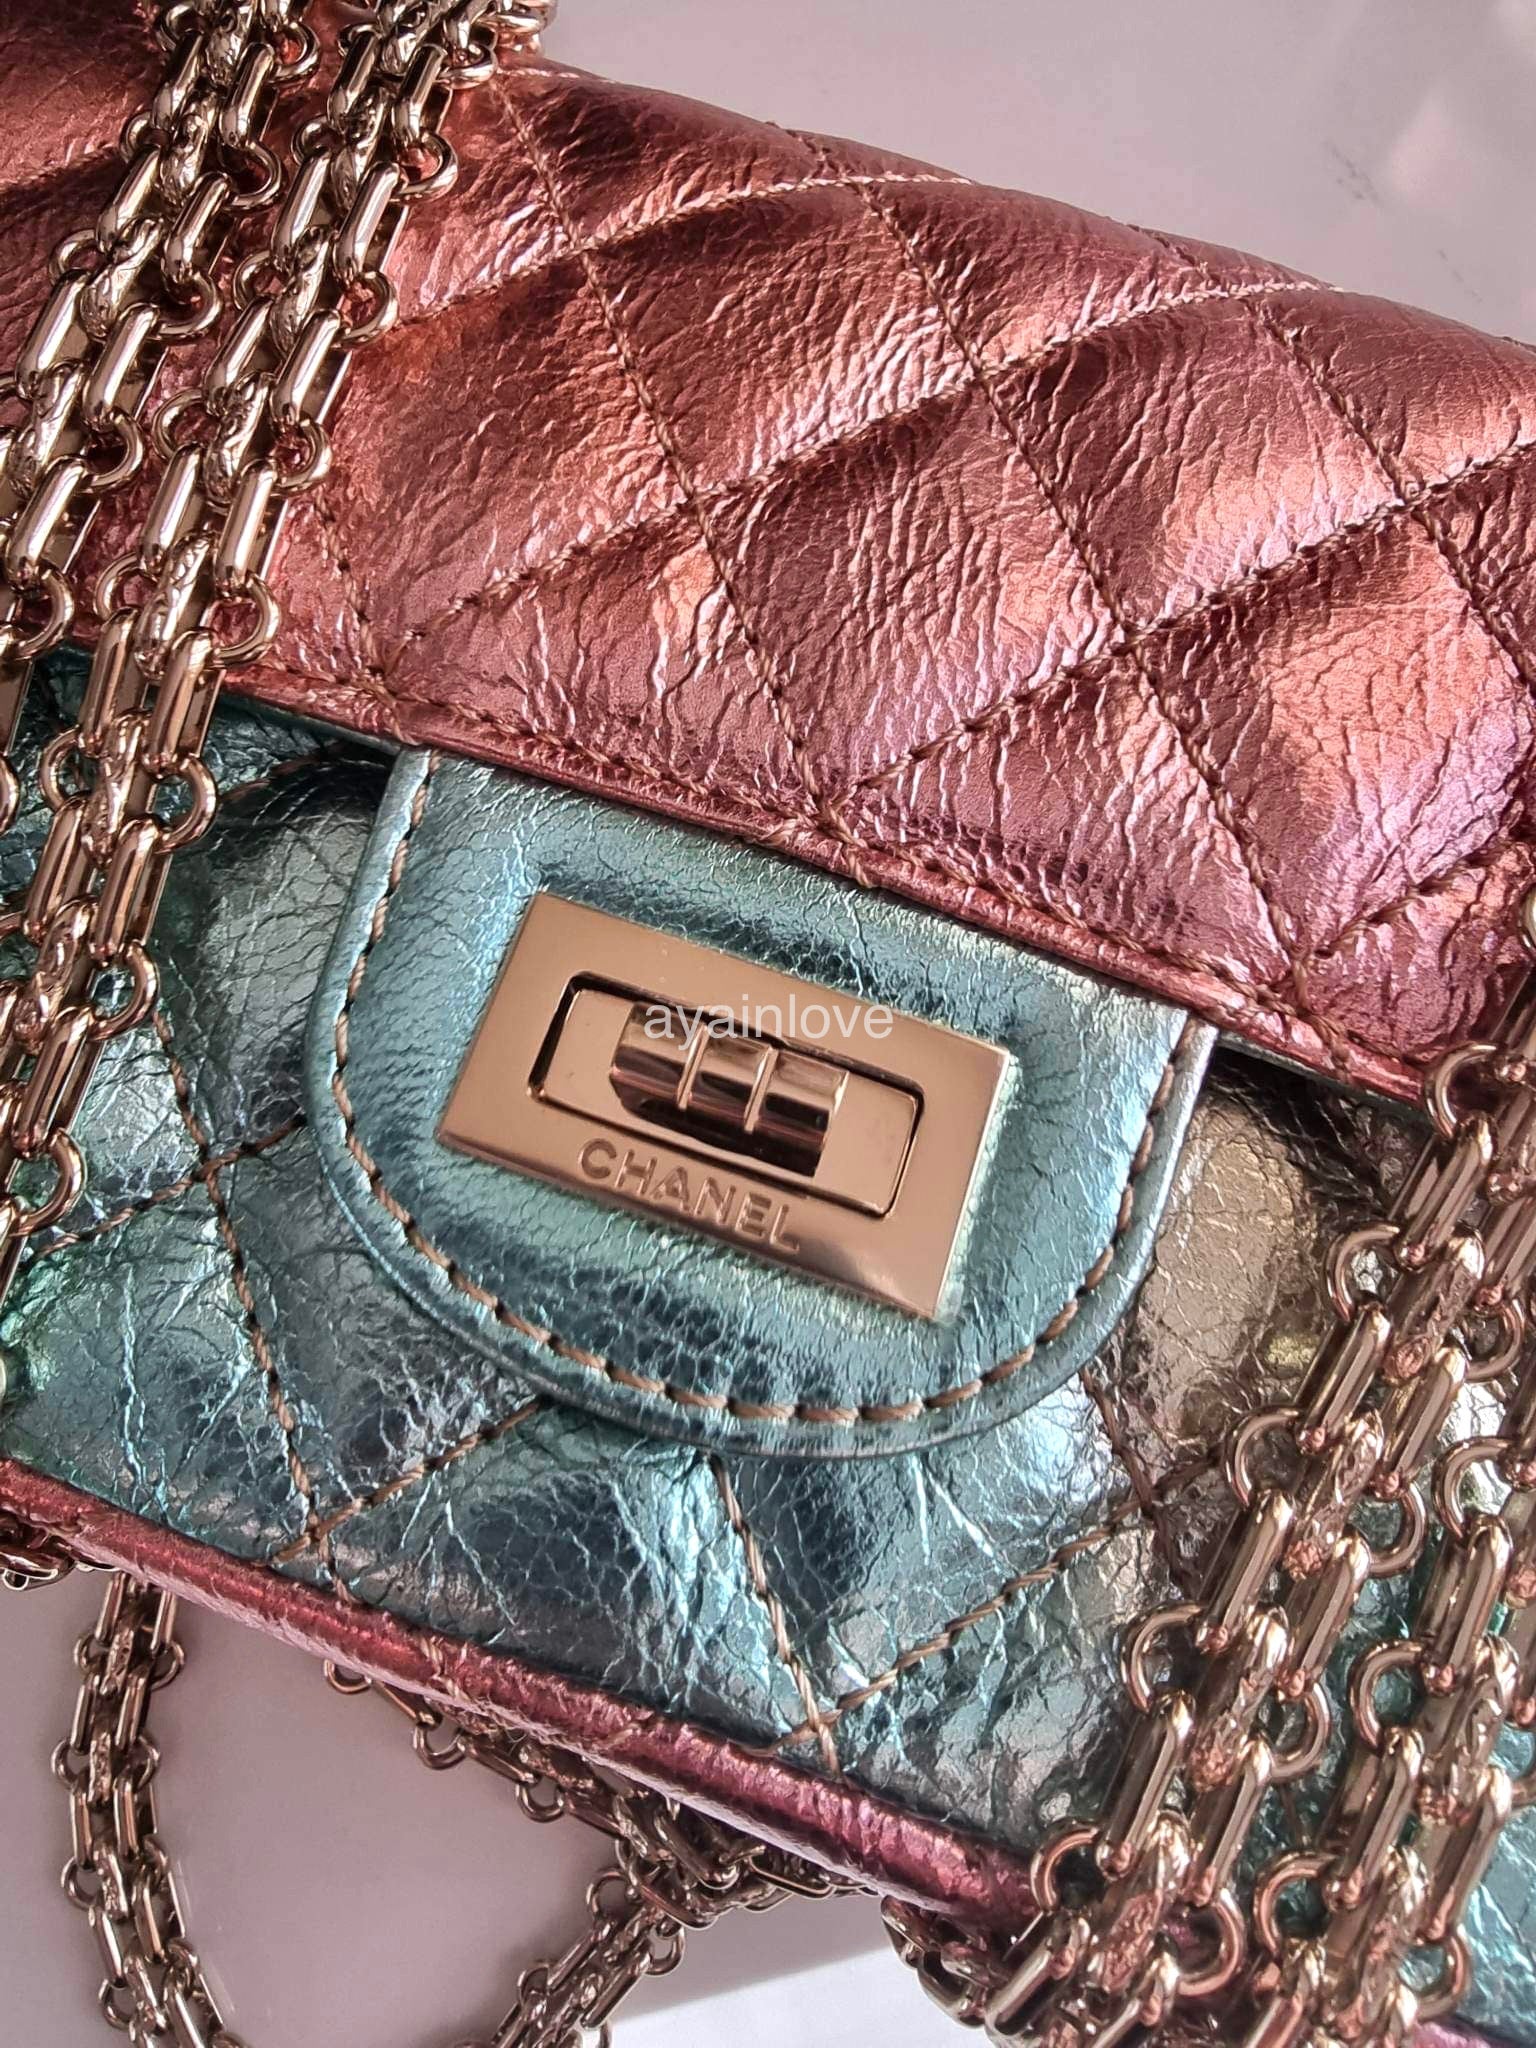 Chanel Medium Deauville Shopping Tote - Blue Totes, Handbags